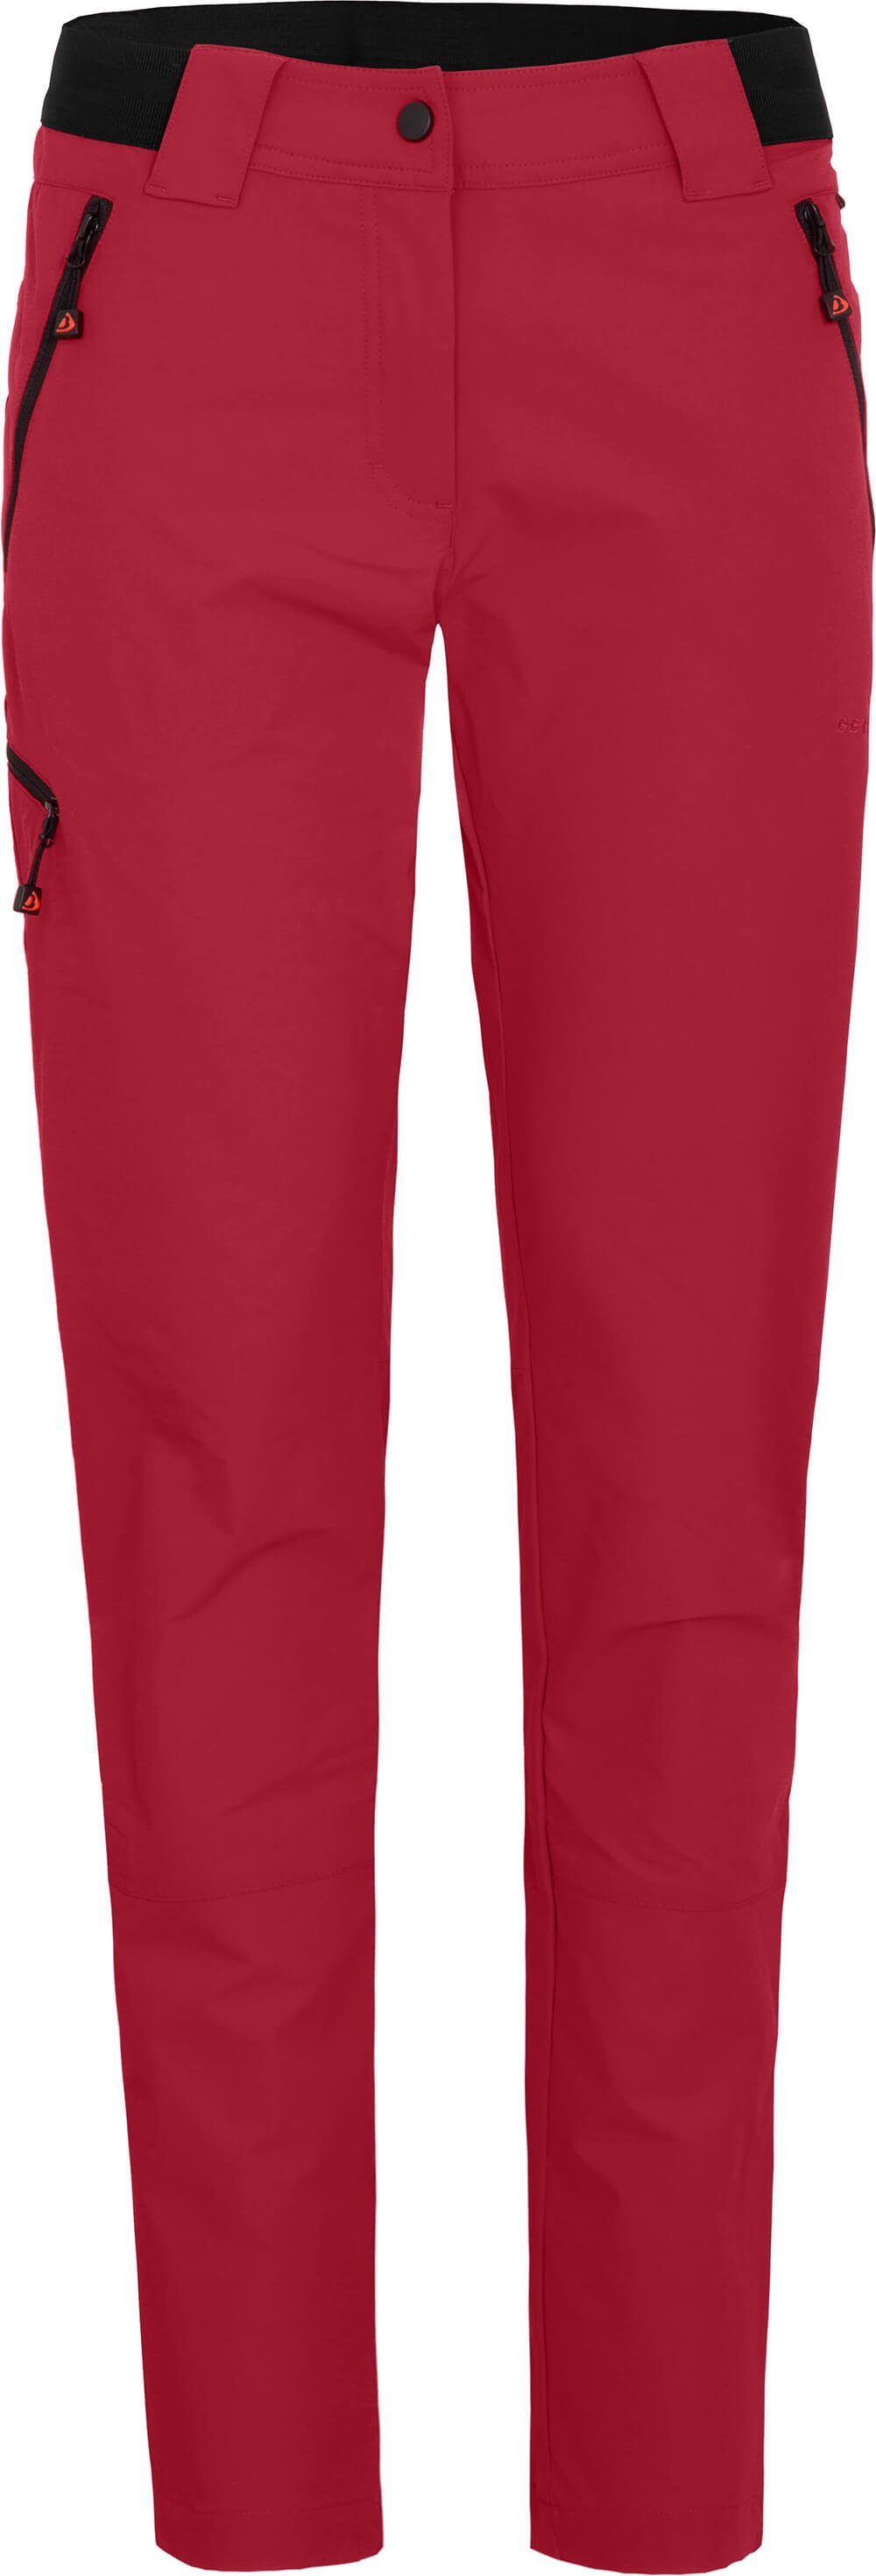 Bergson Outdoorhose VIDAA COMFORT (slim) Damen Wanderhose, leicht, strapazierfähig, Normalgrößen, rot